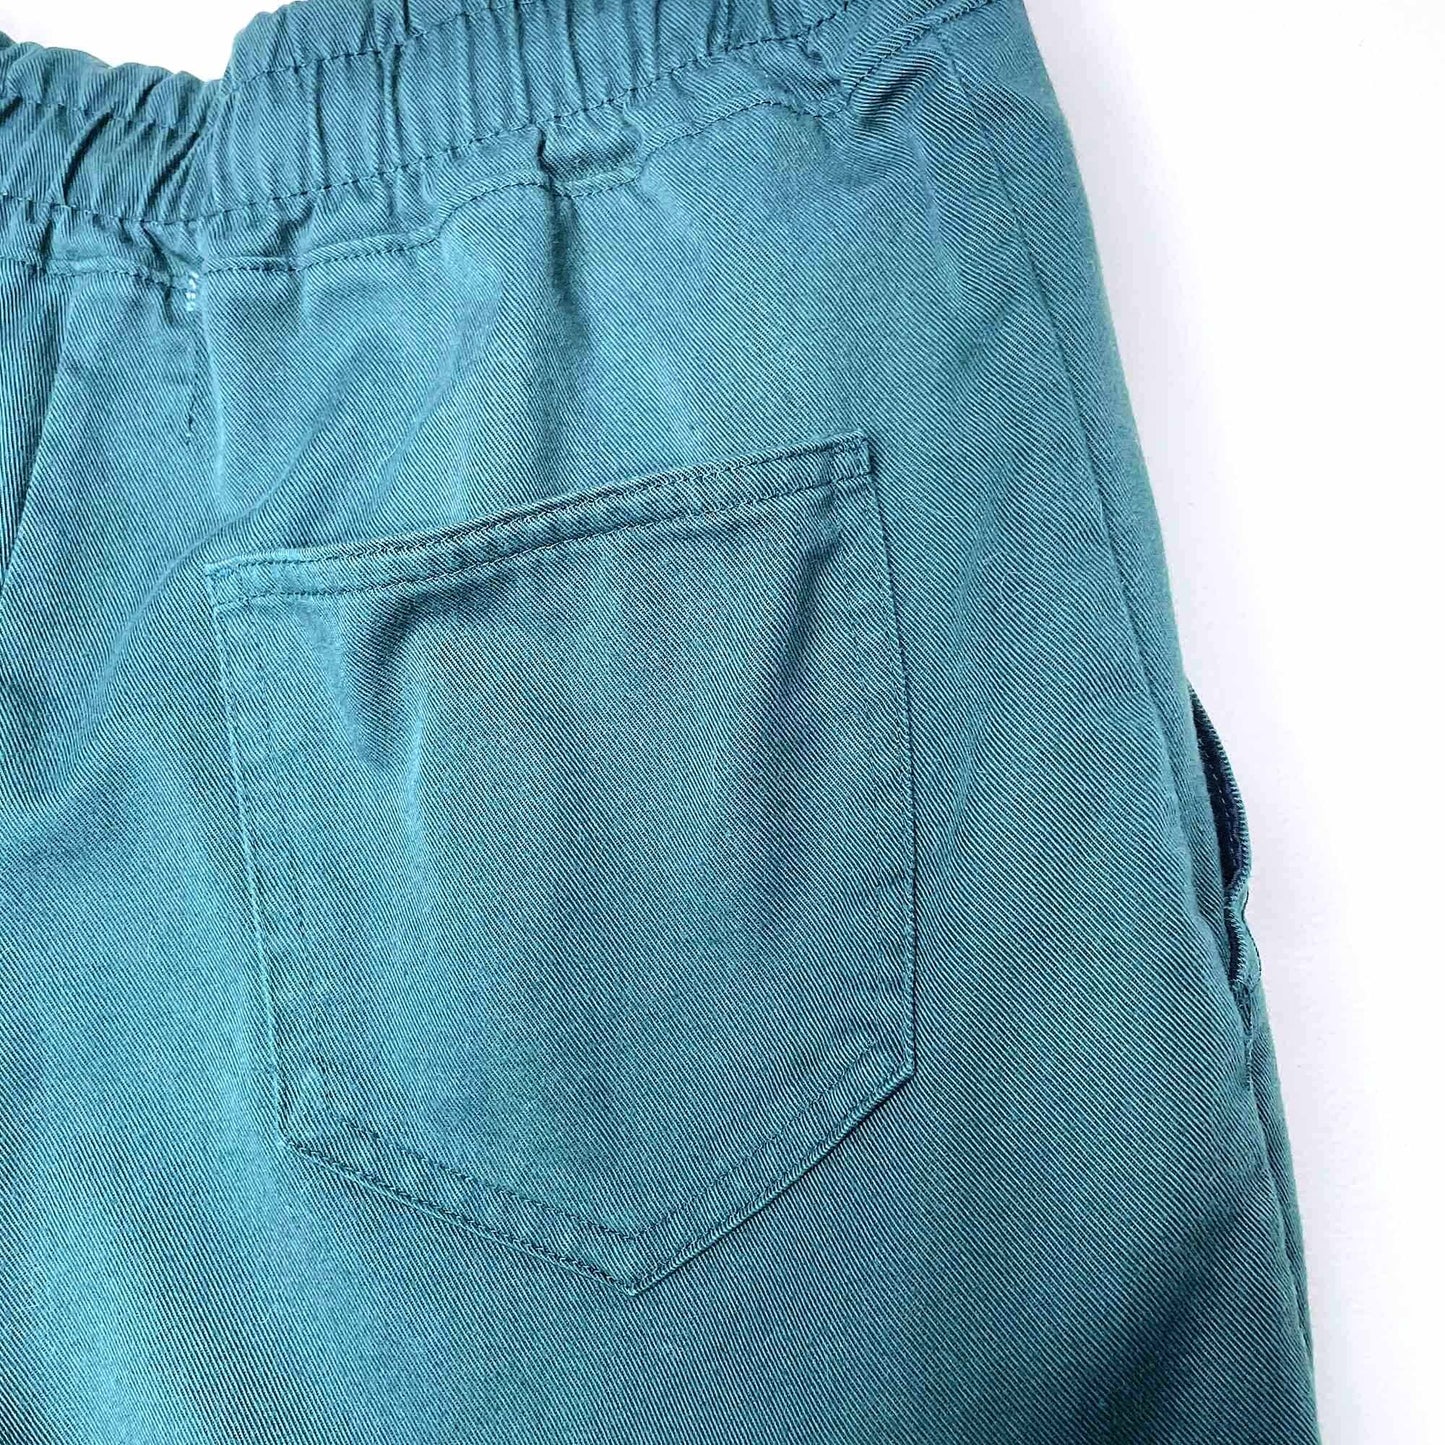 Muttonhead roamer shorts - size xs